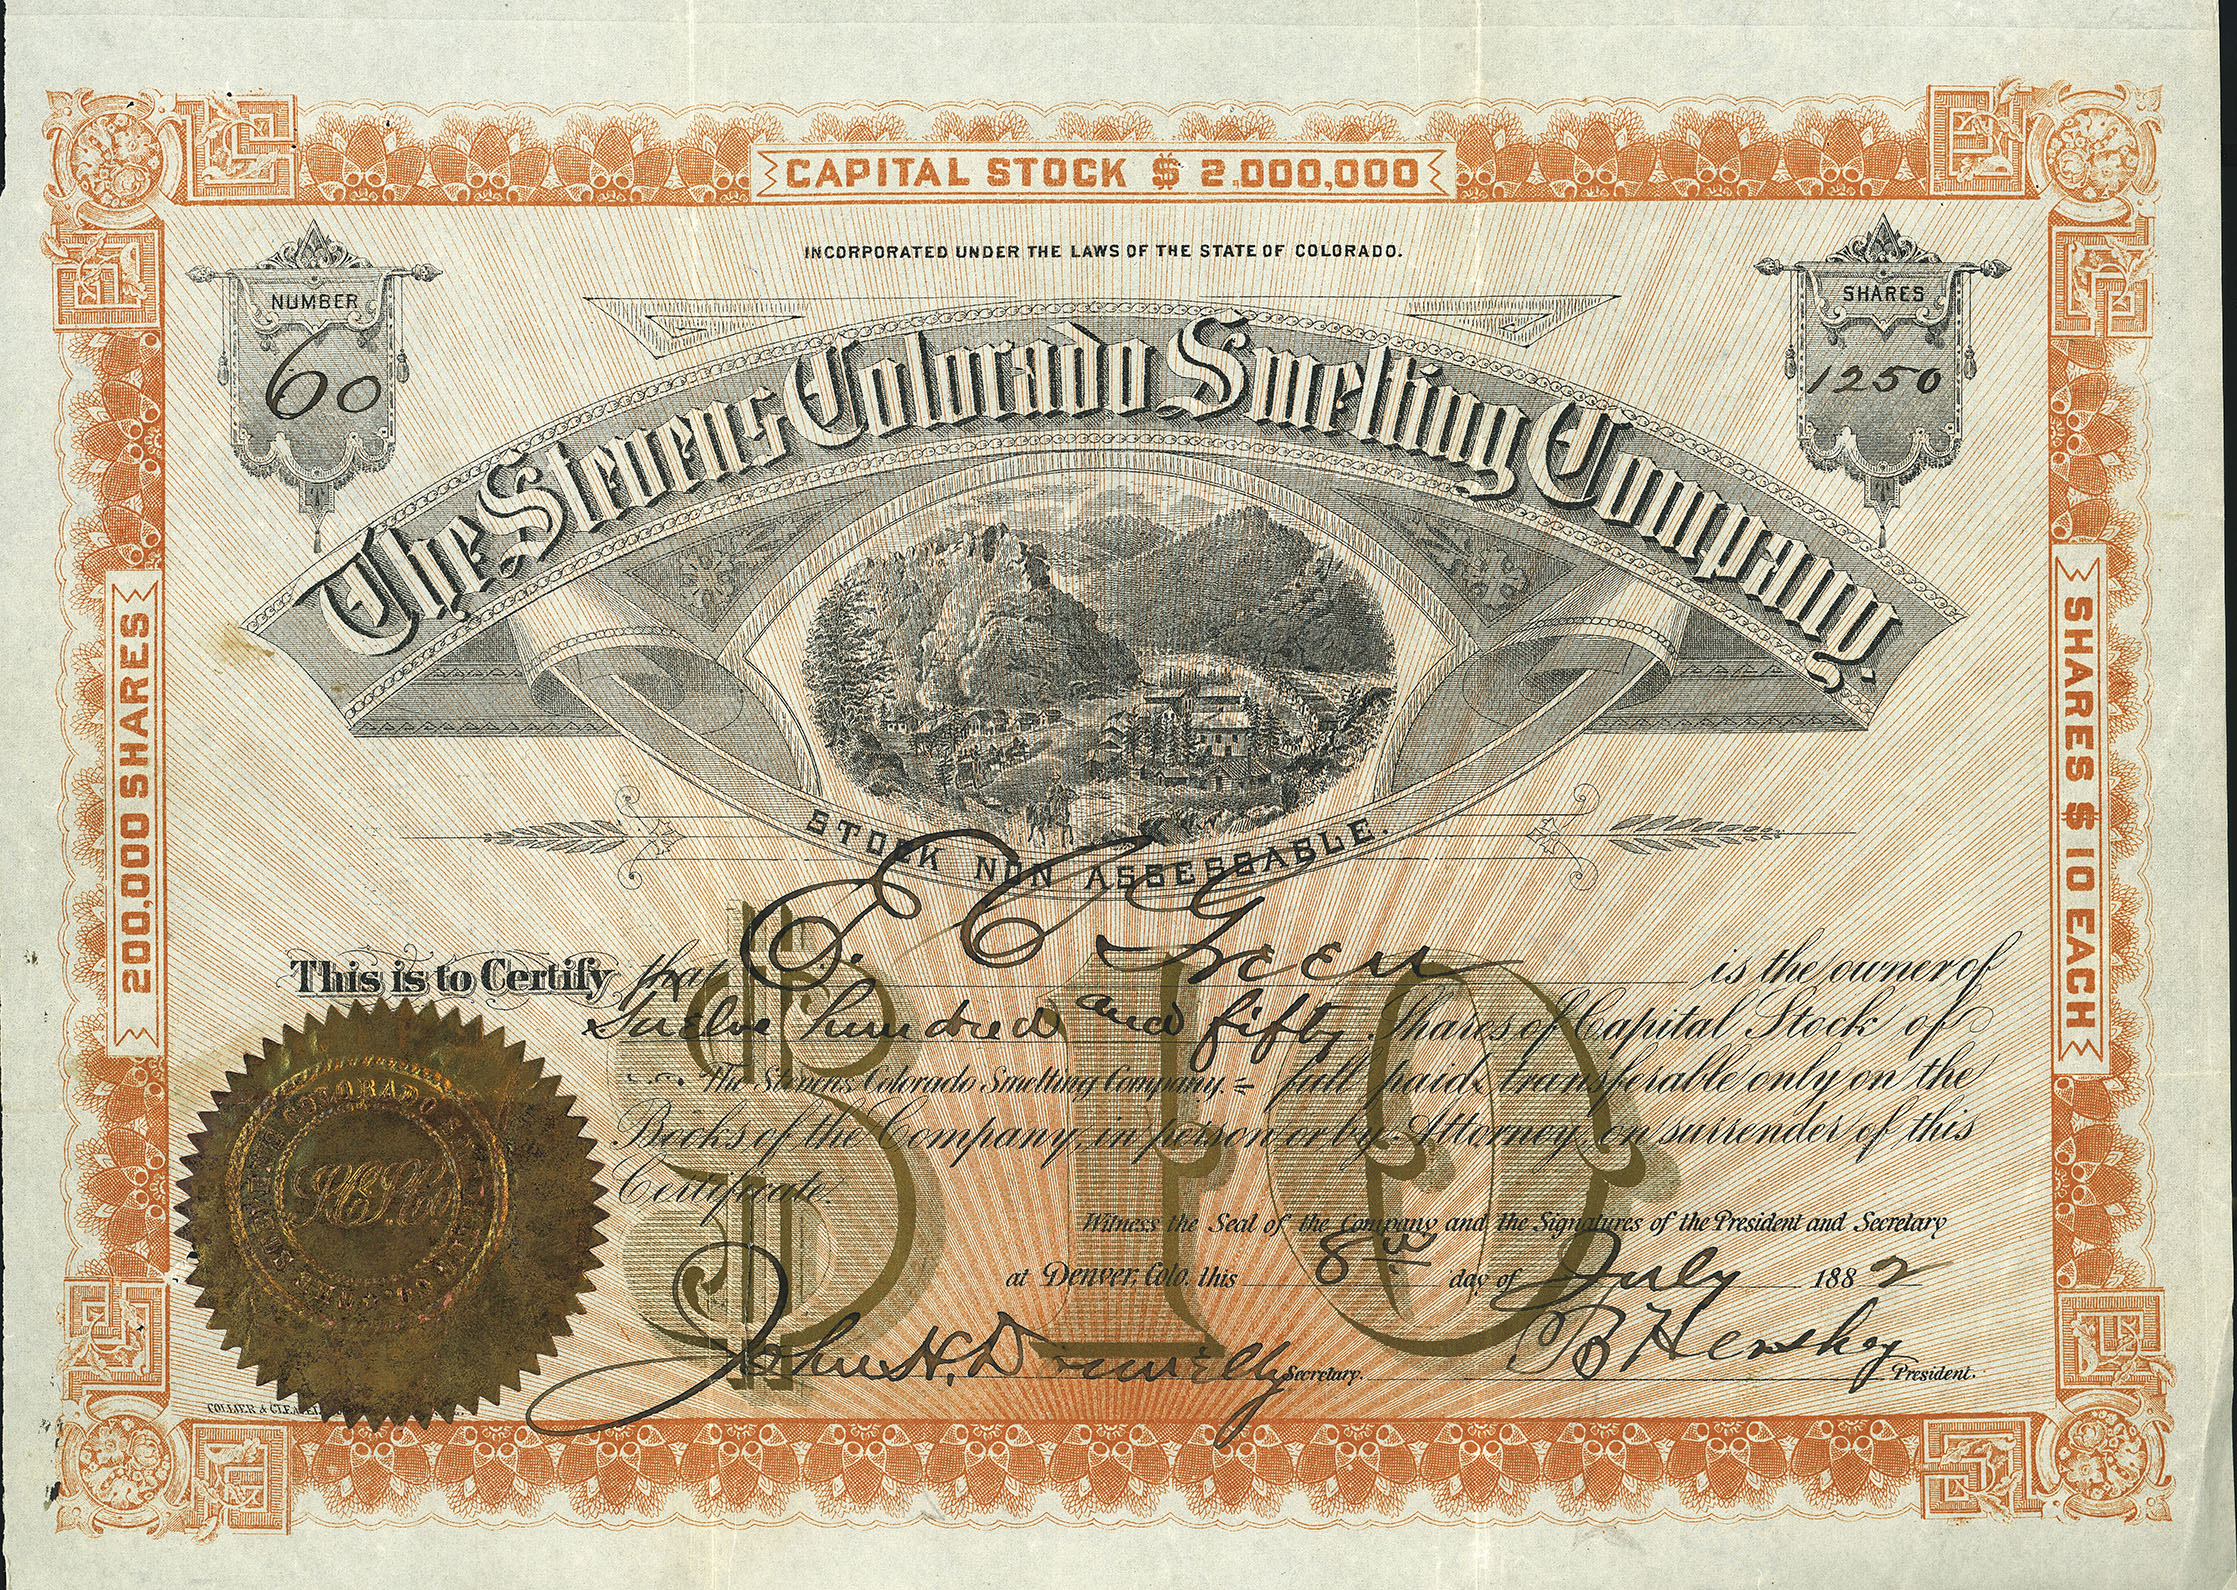 STEVENS COLORADO SMELTING COMPANY, mining stock certificate, 1882